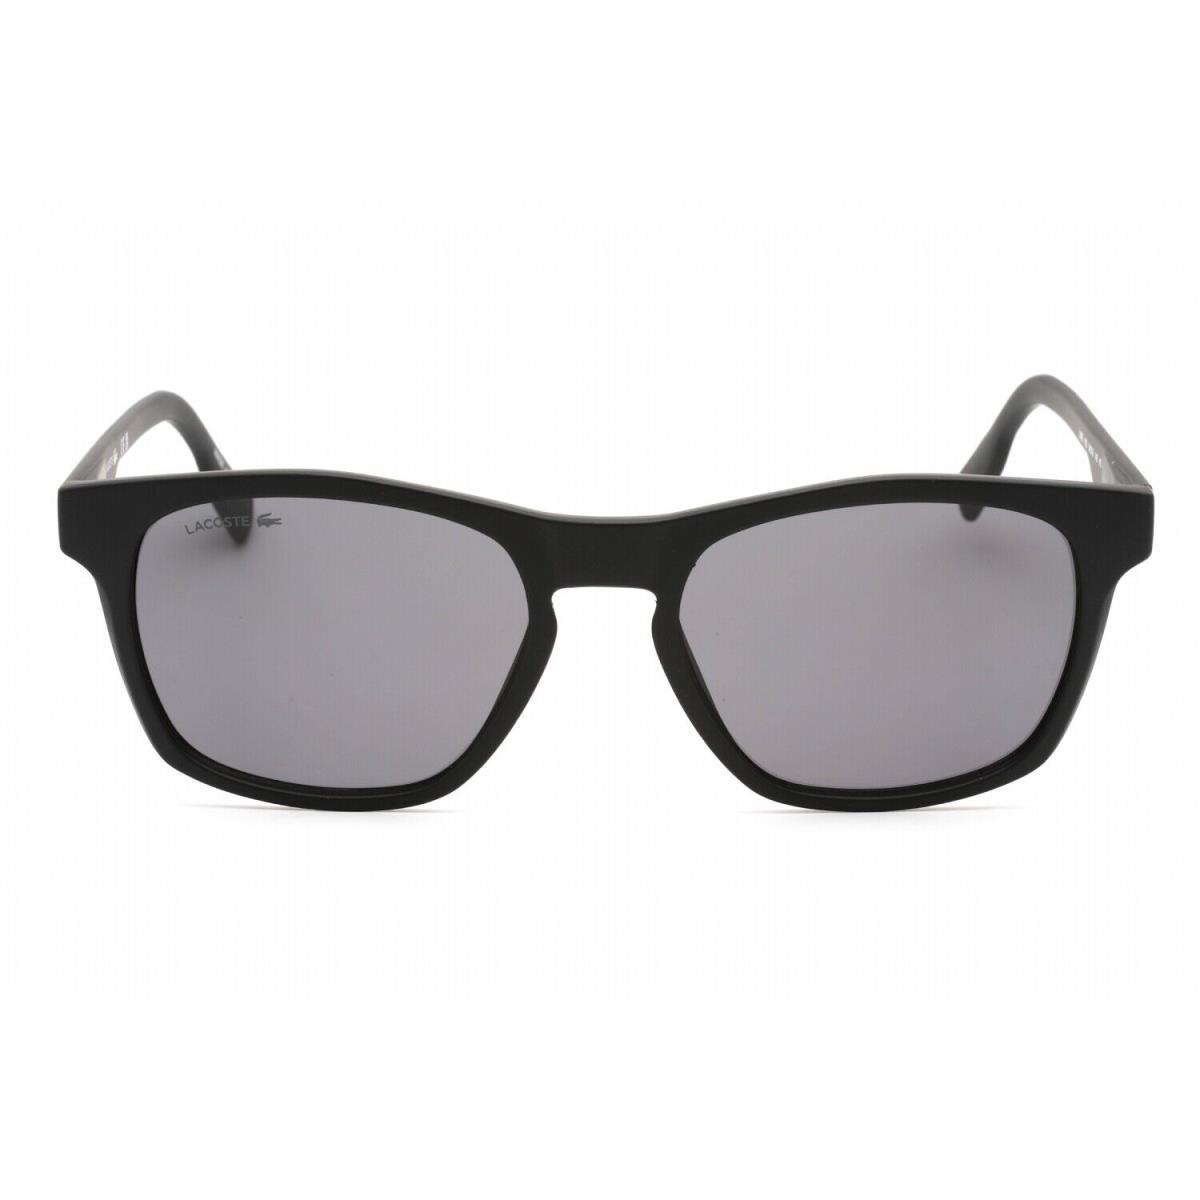 Lacoste L988S 002 Sunglasses Matte Black Frame Grey Lenses 54mm